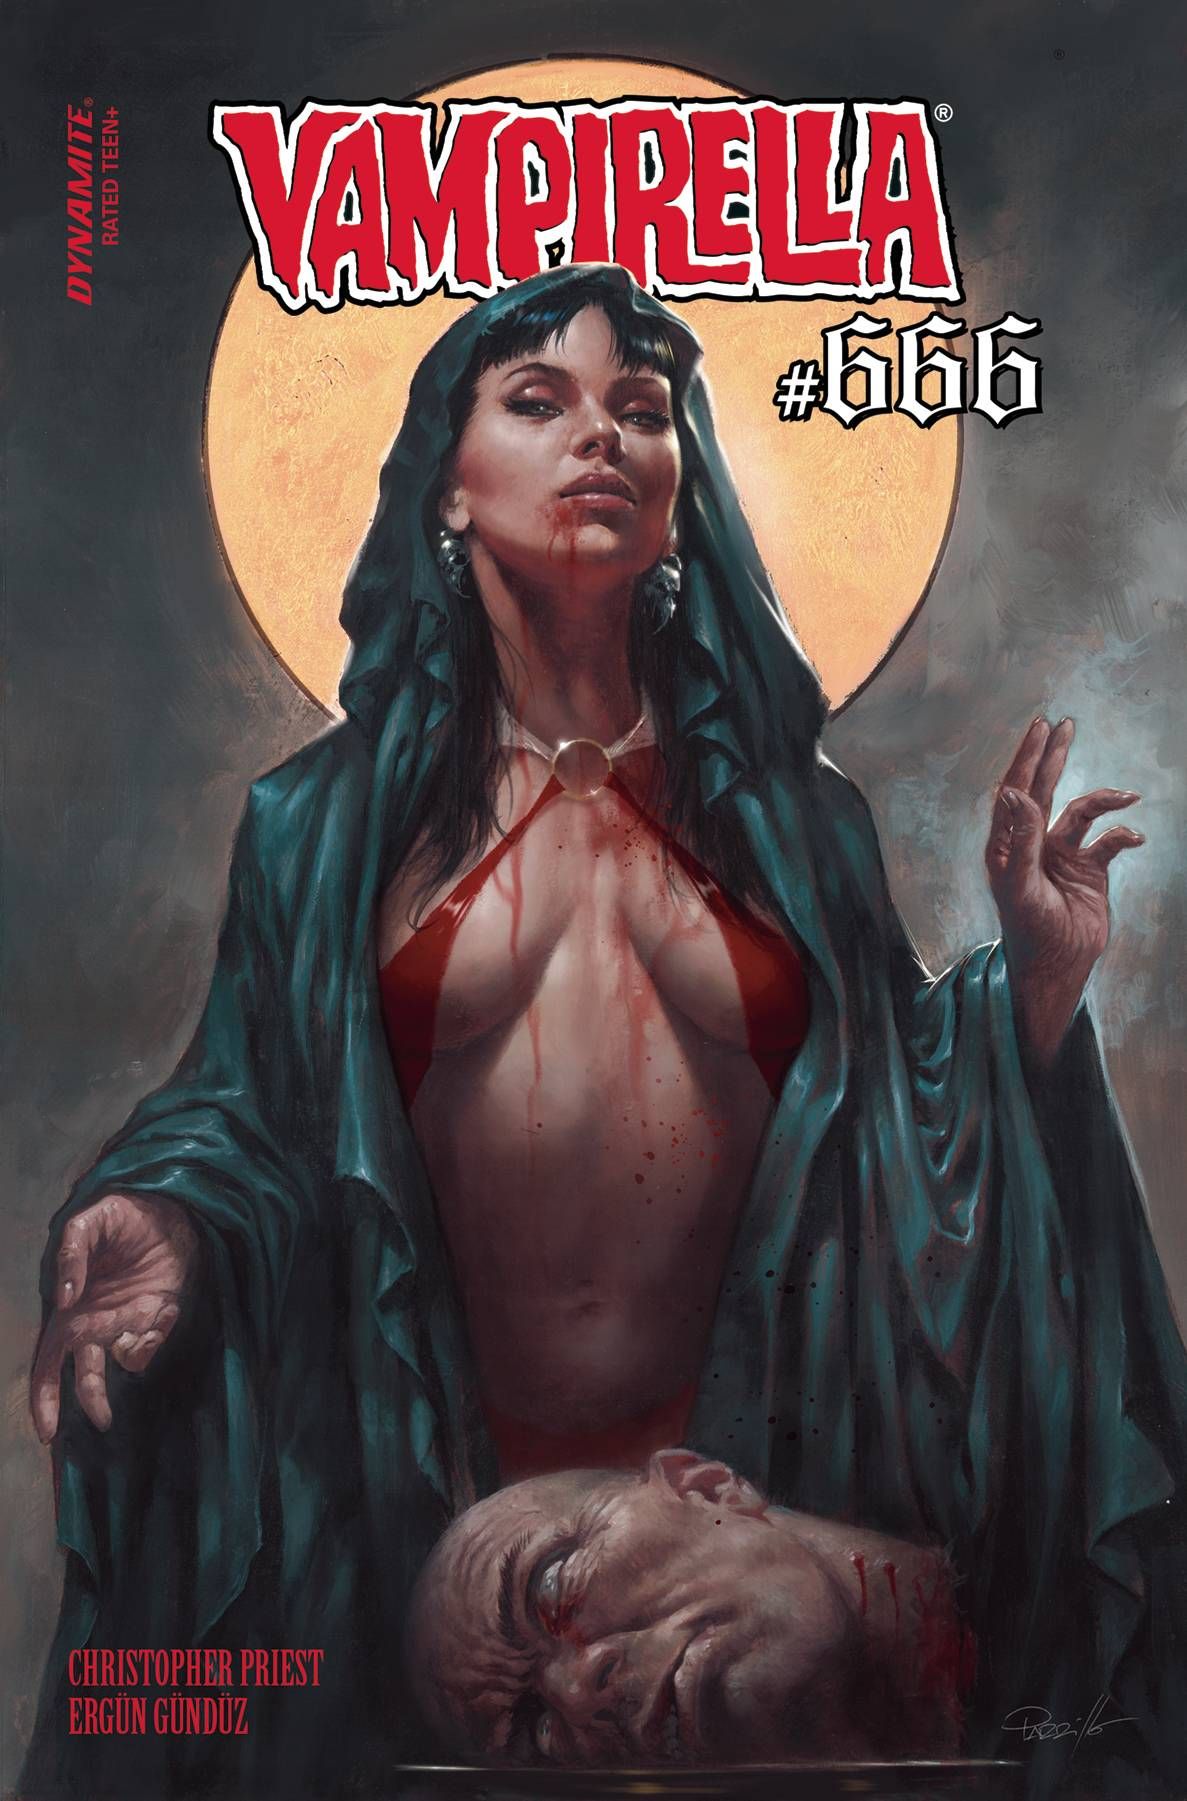 Vampirella #666 Comic